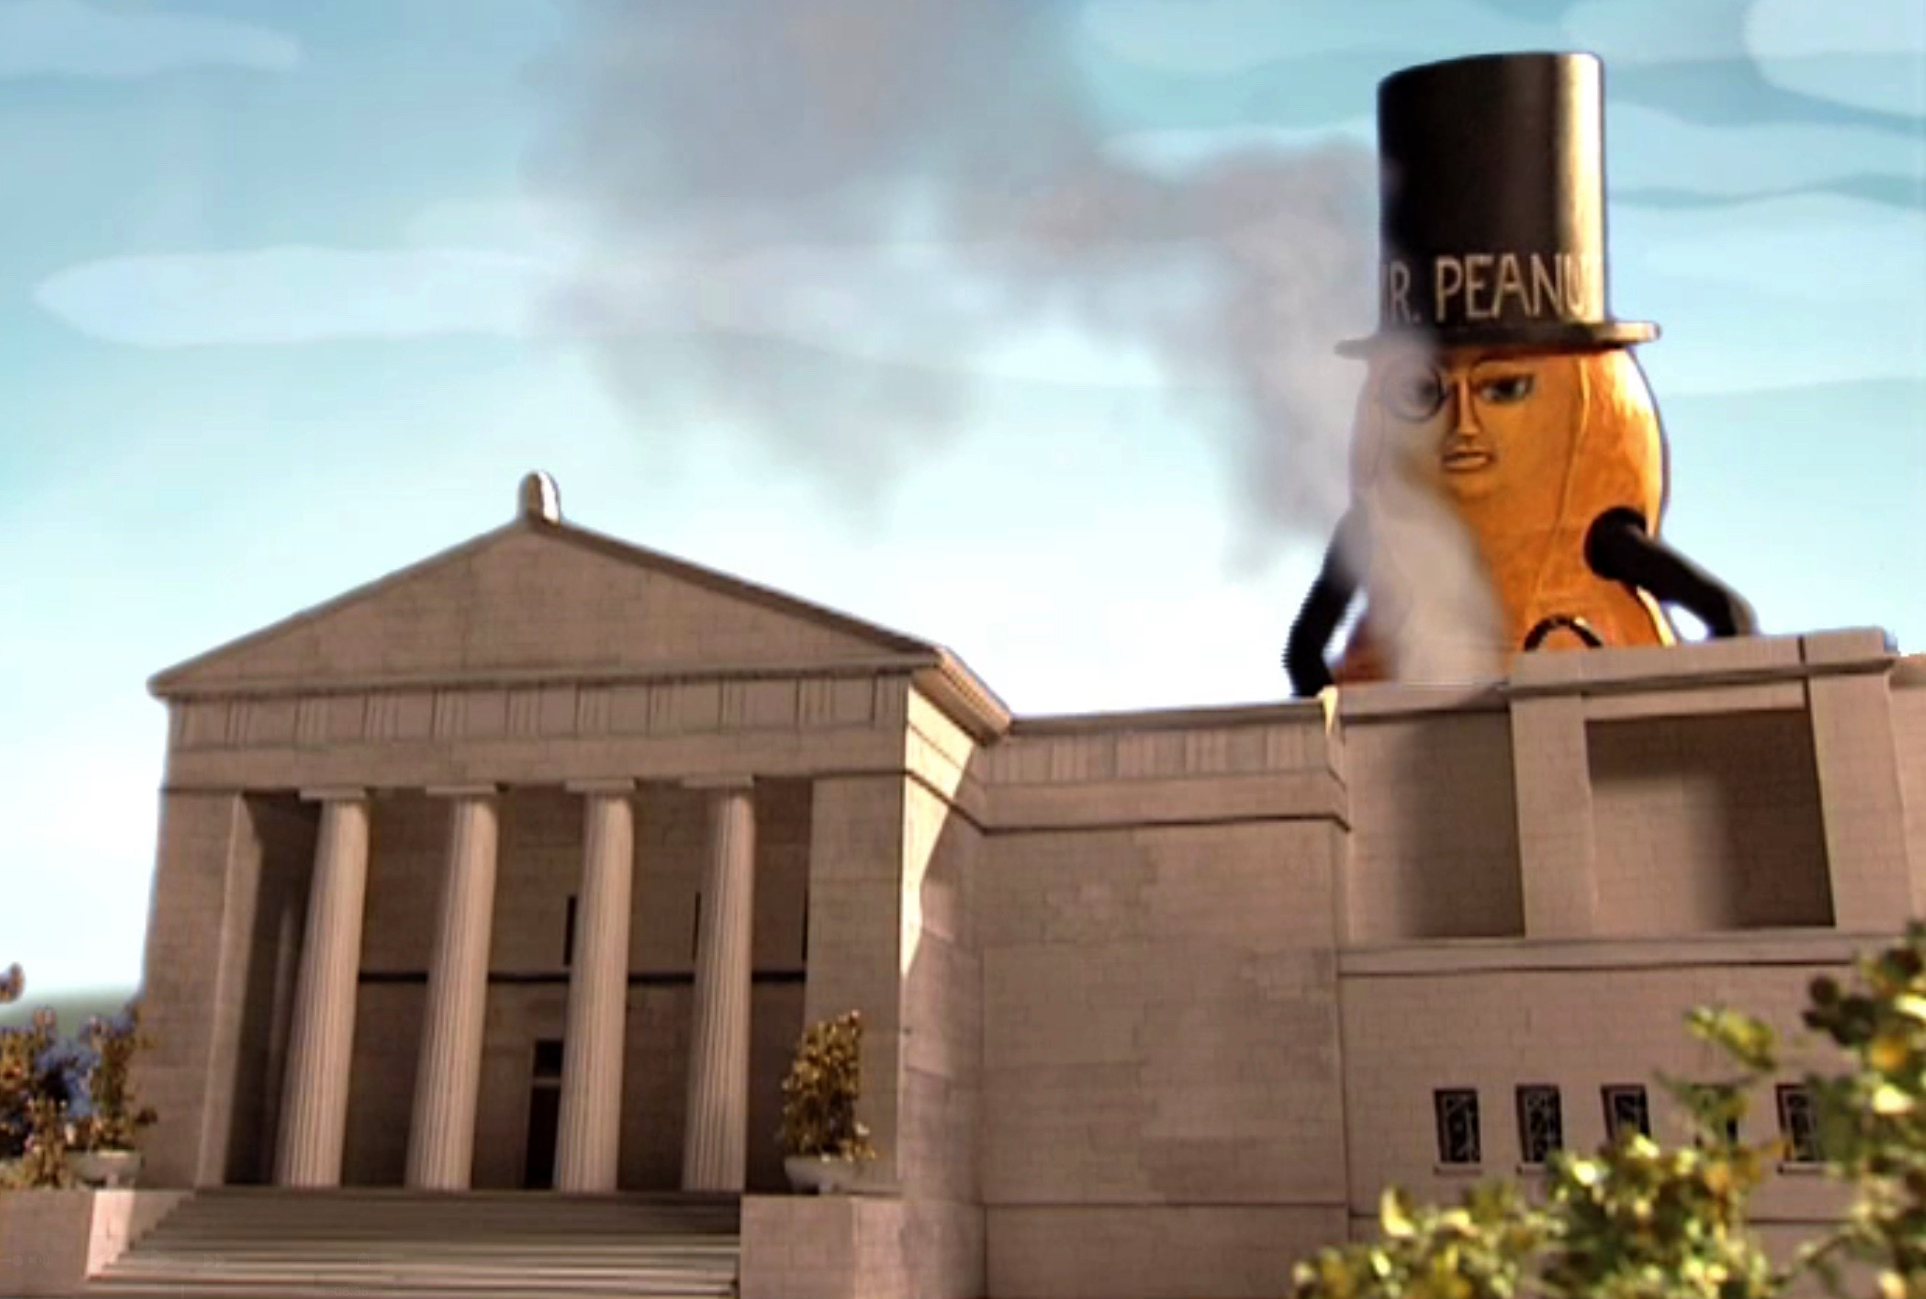 a giant Mr. Peanut looming over the Cincinnati Art Museum